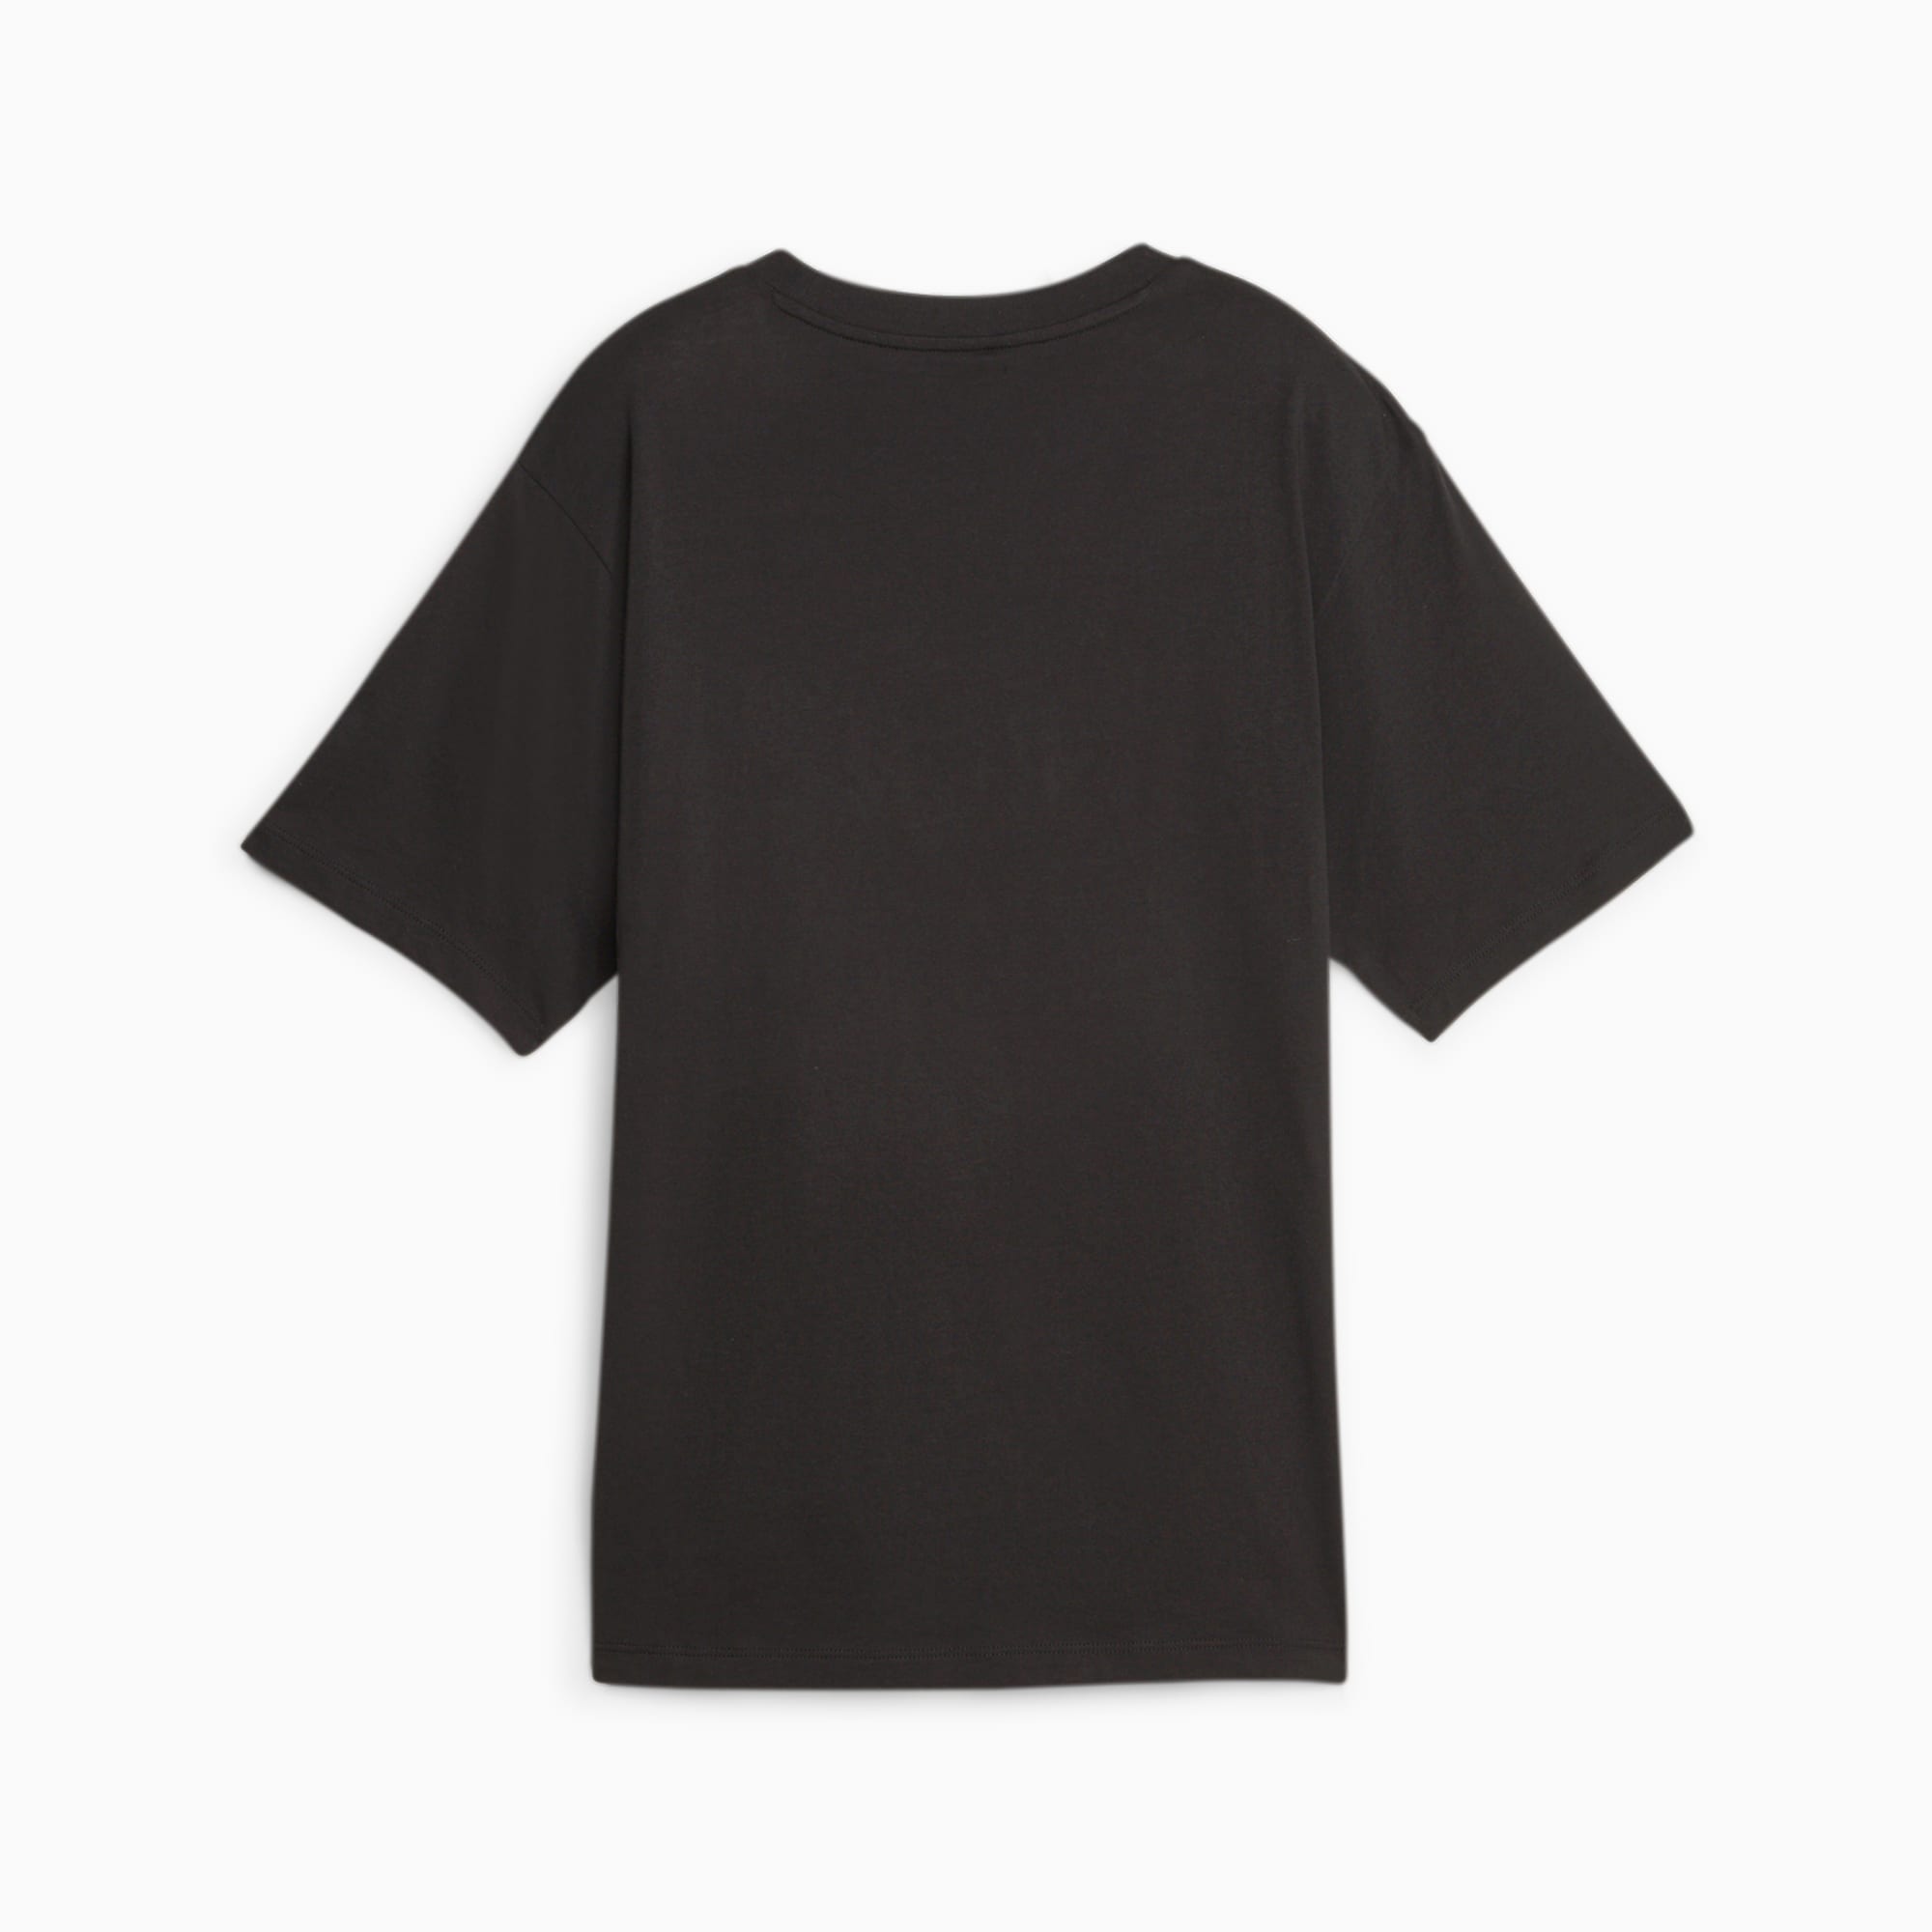 PUMA Ess+ Marbleized Women's Relaxed T-Shirt, Black, Size XL, Clothing